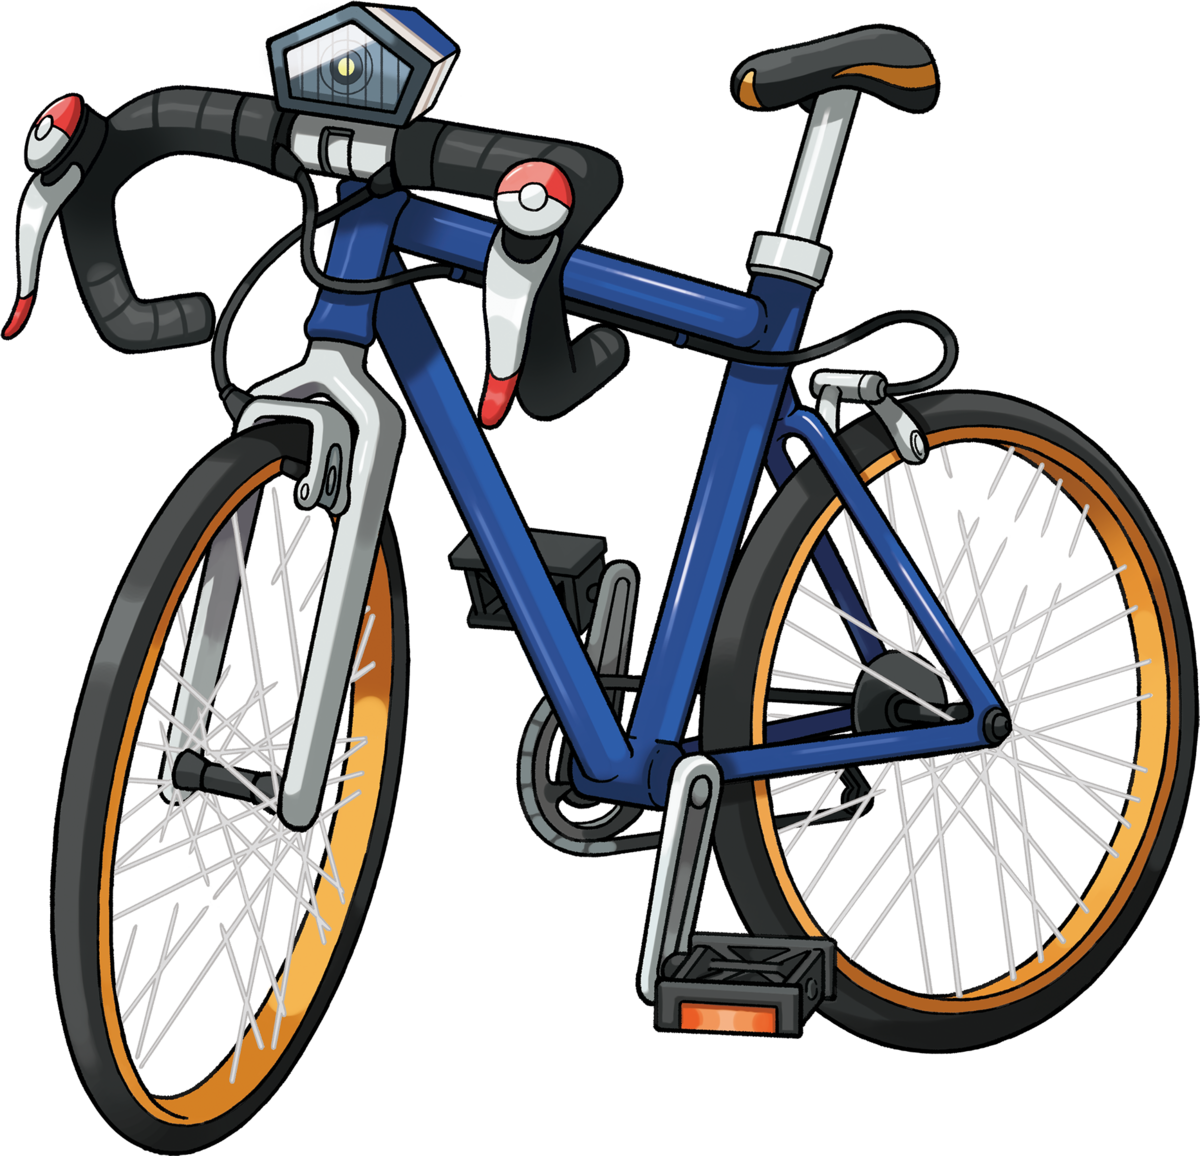 Mach Bike Bulbapedia The Community Driven Pokemon Encyclopedia